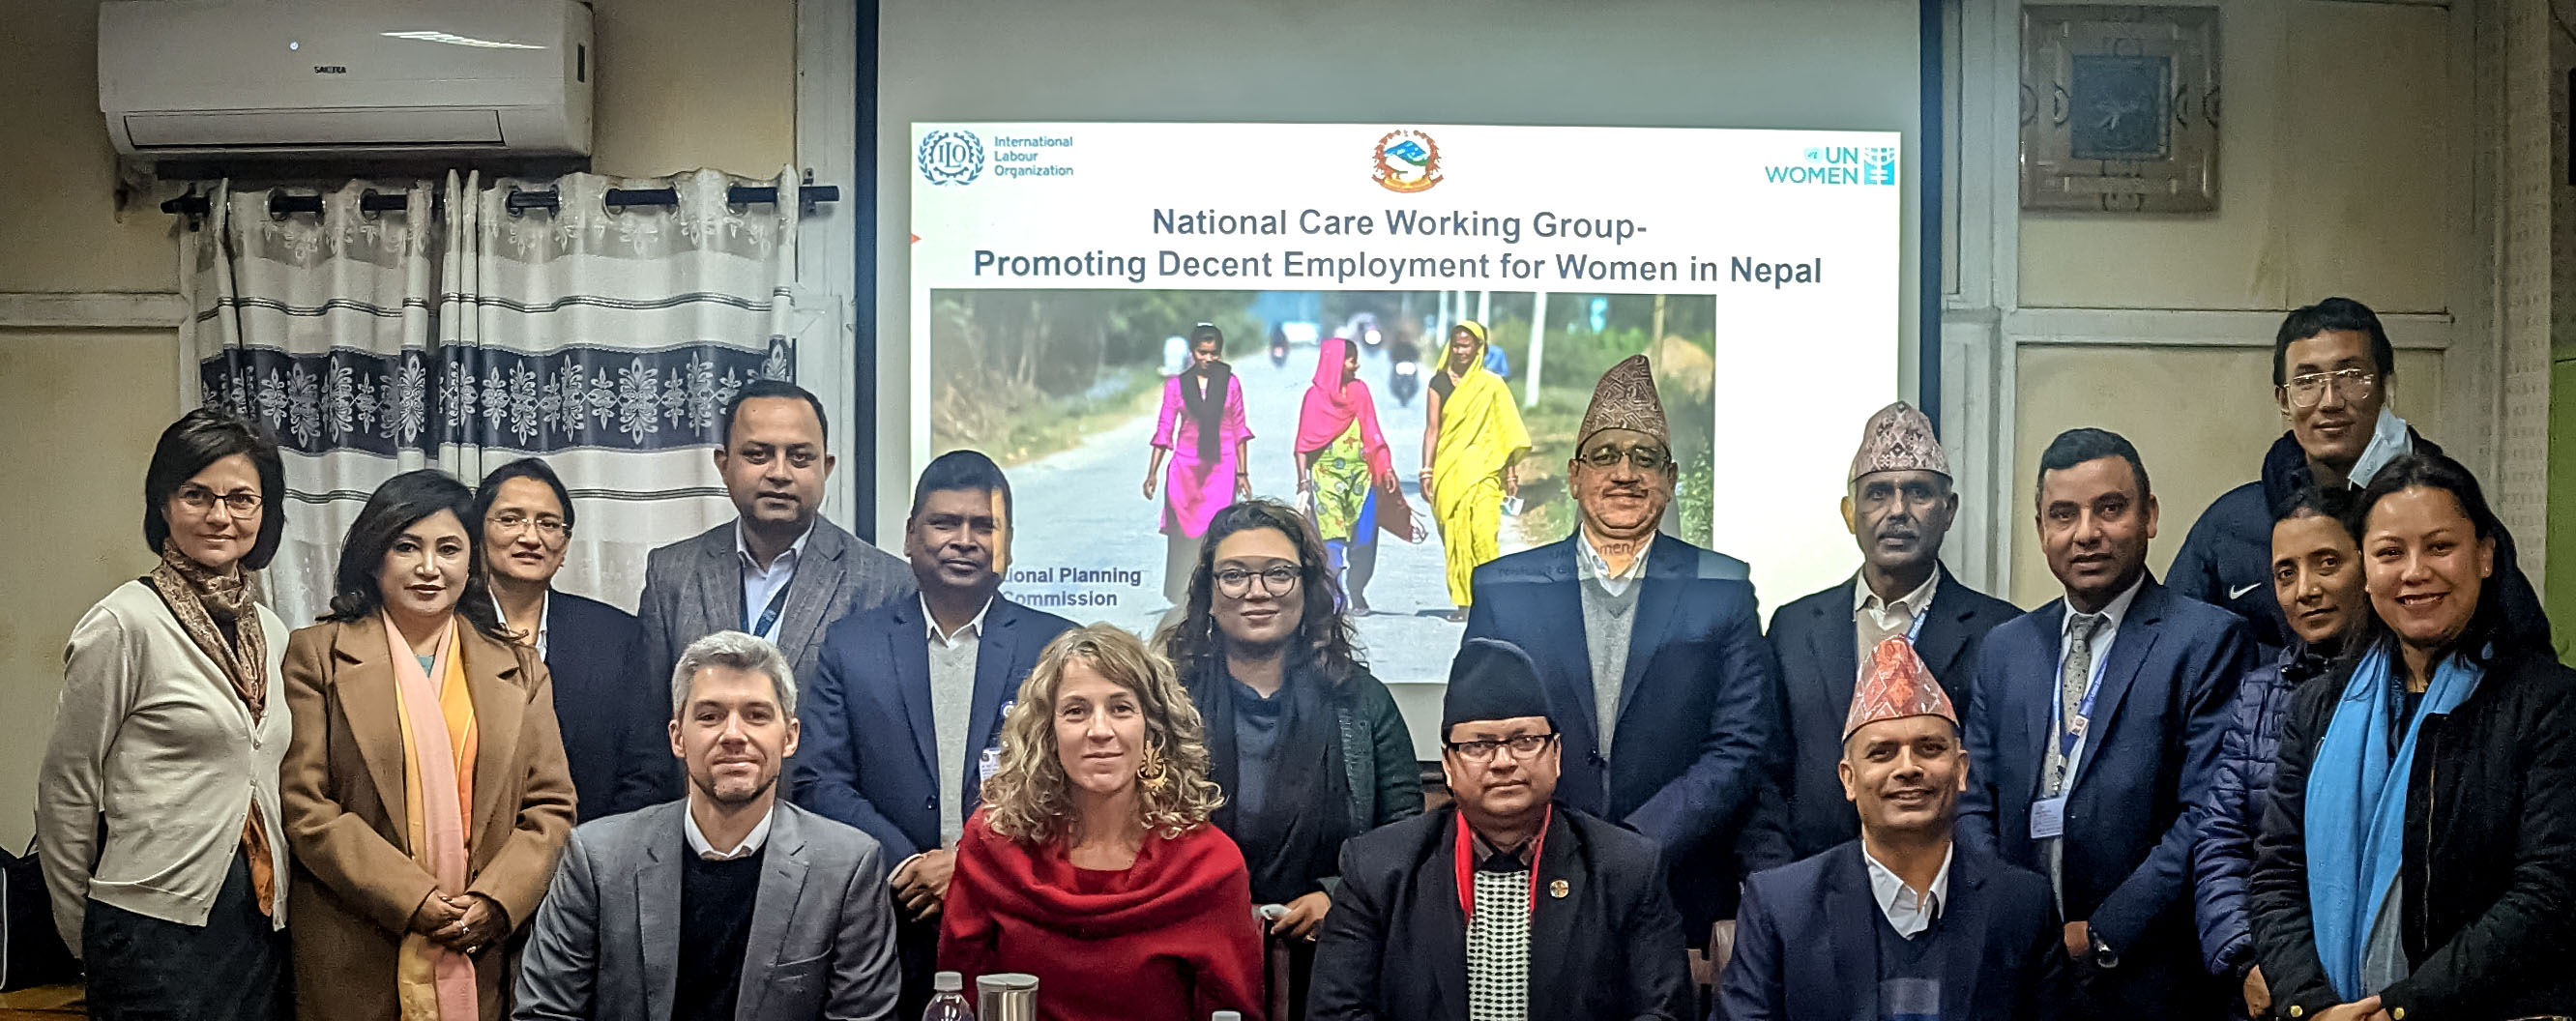 Members of the Nepal Care Working Group in Kathmandu, Nepal. Photo: UN Women 